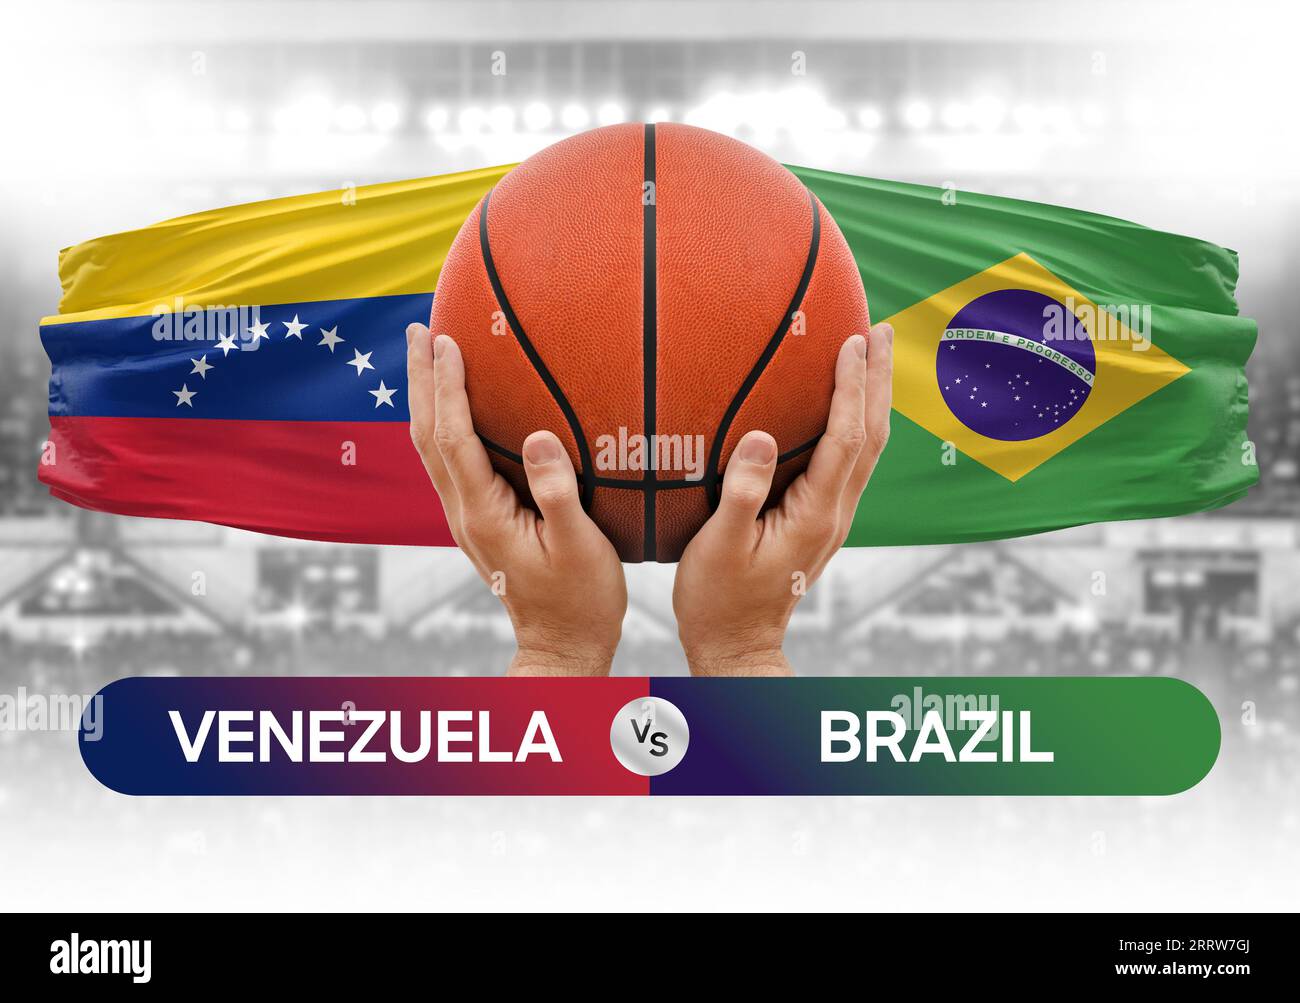 Venezuela vs Brazil national basketball teams basket ball match competition cup concept image Stock Photo